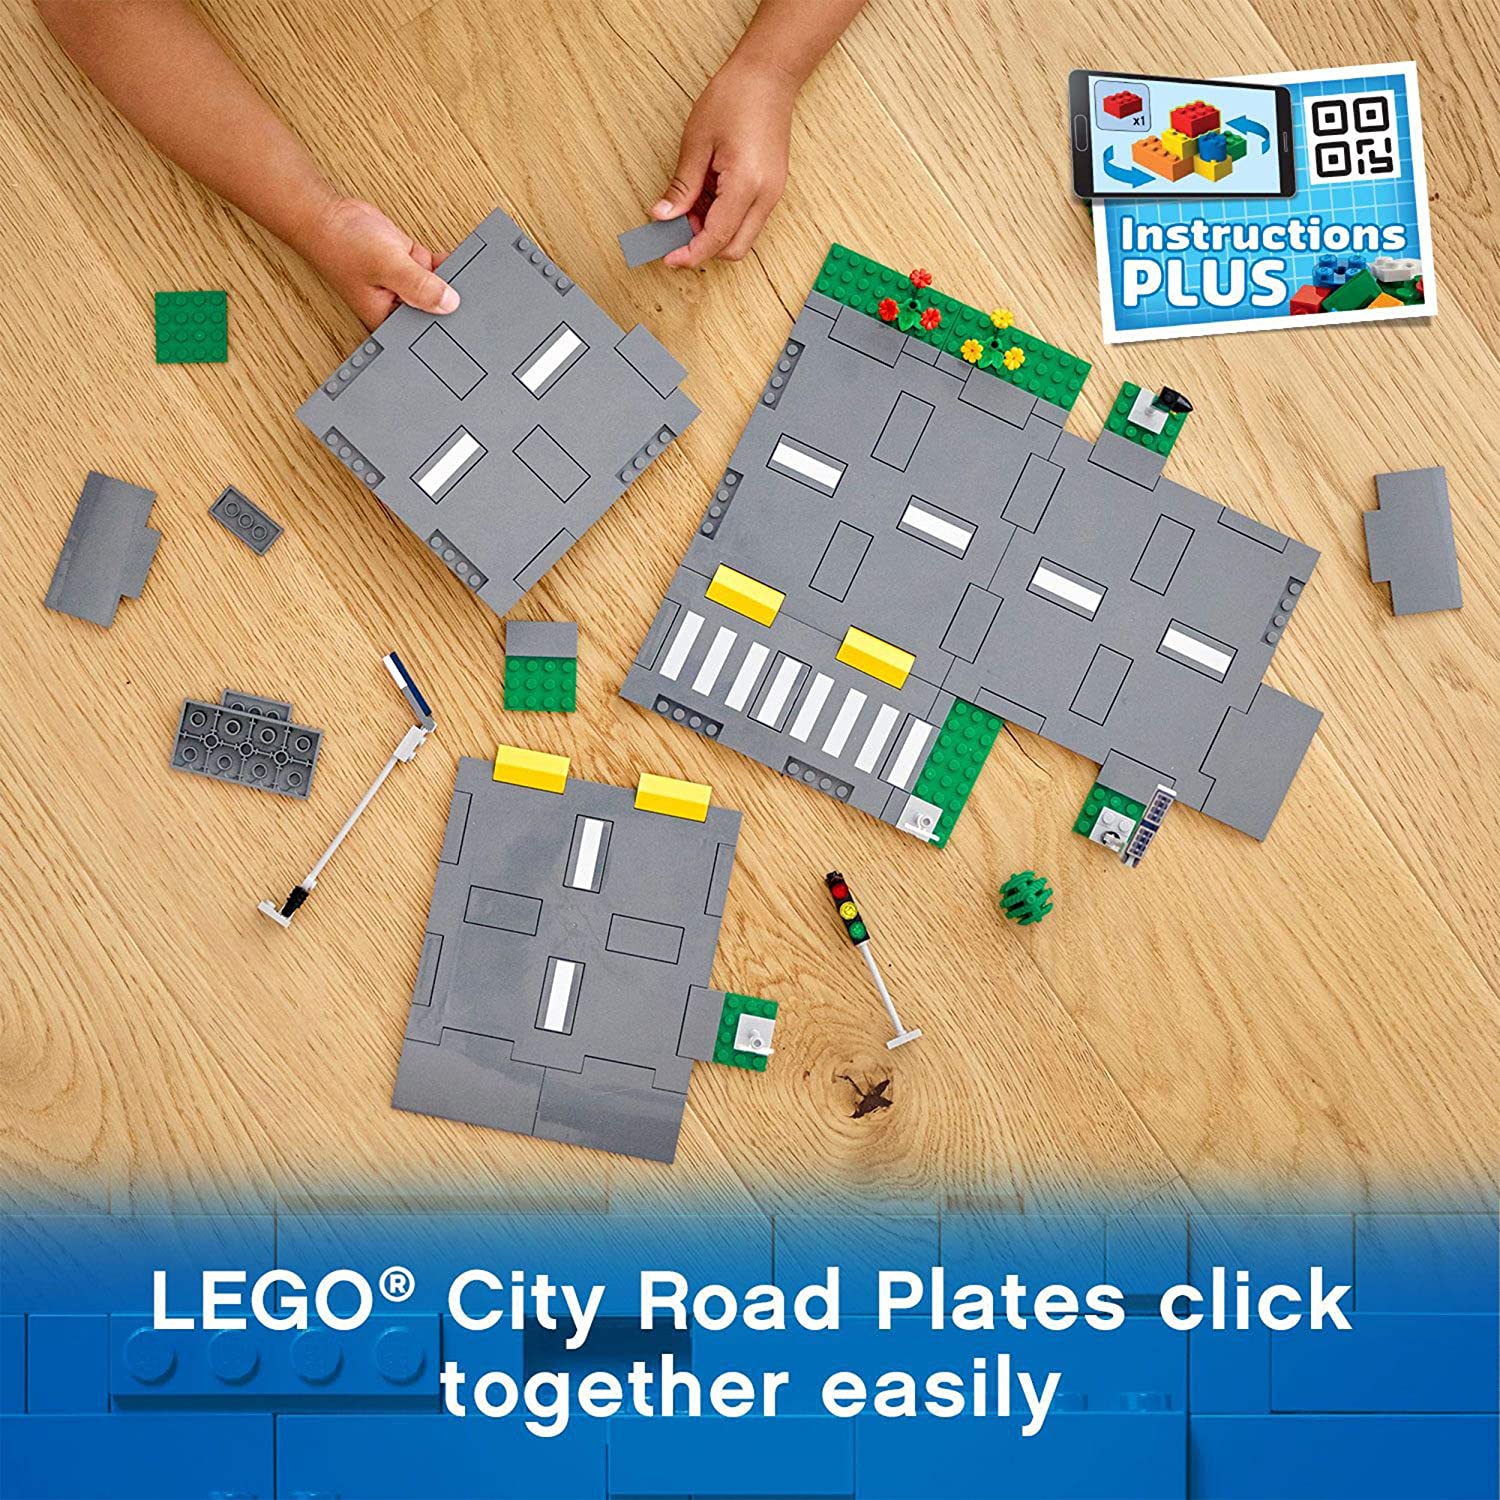 Lego 60304 Road Plates